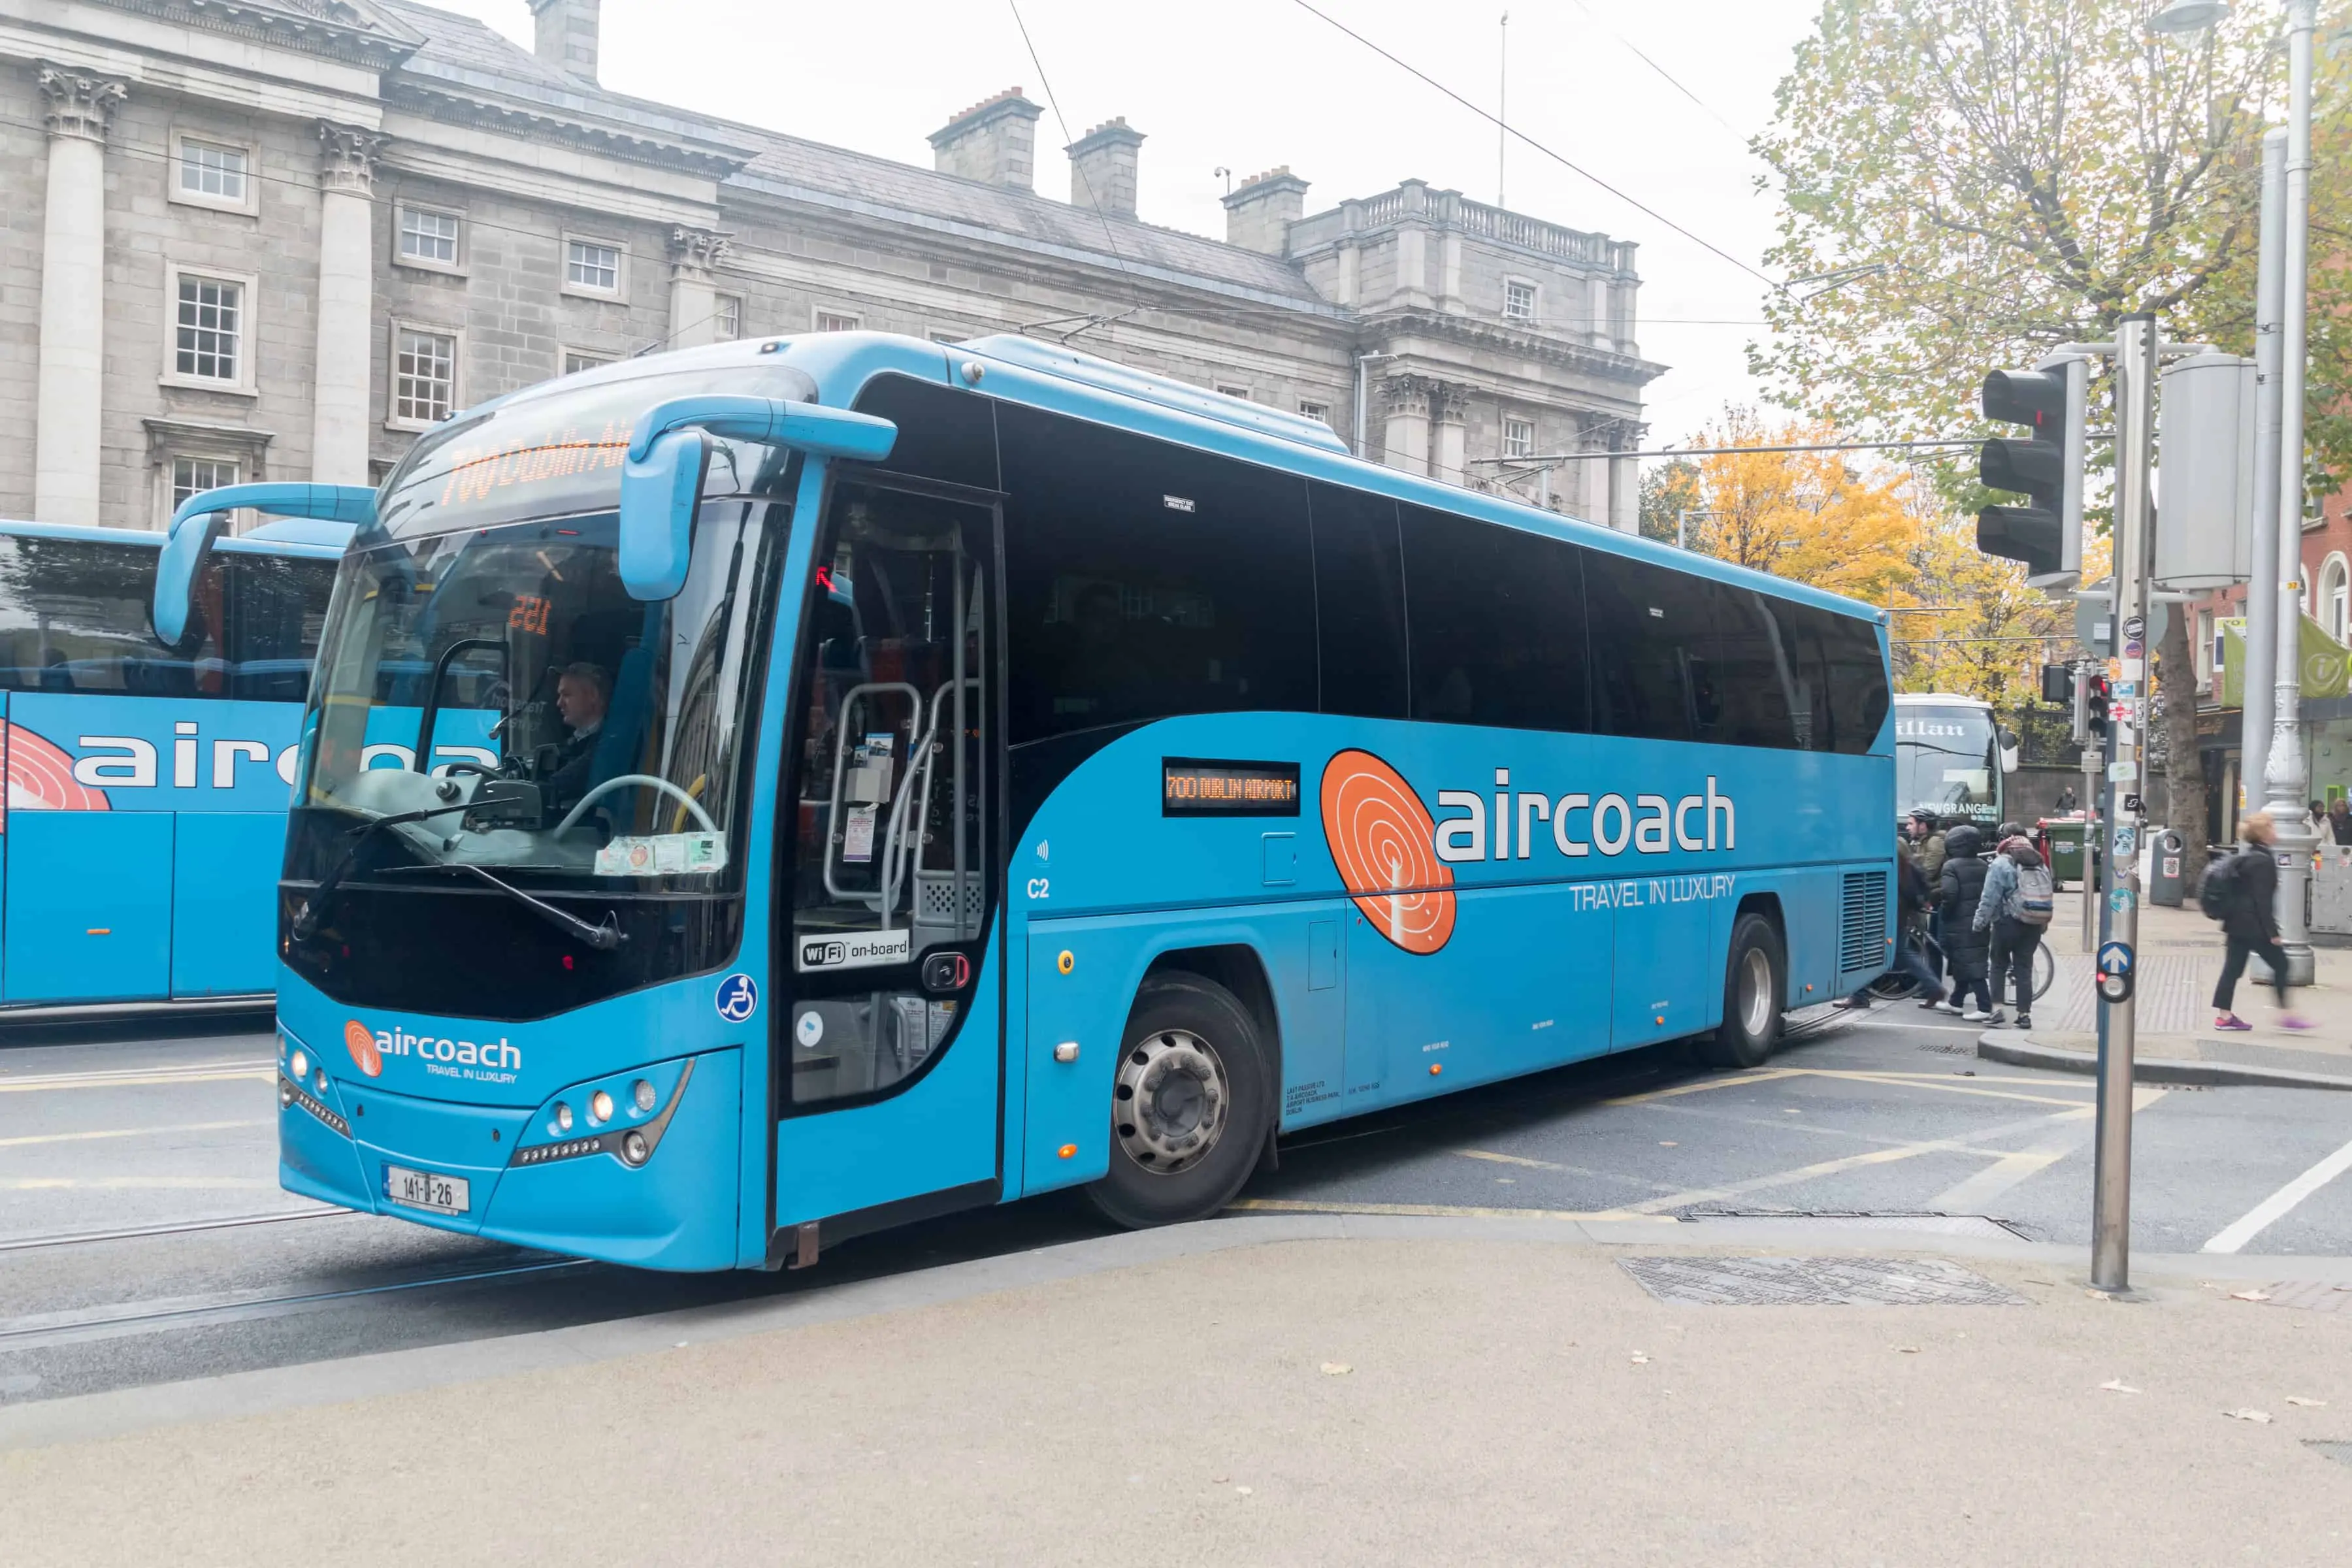 Aircoach Dublin bus from Dublin Airport to city center